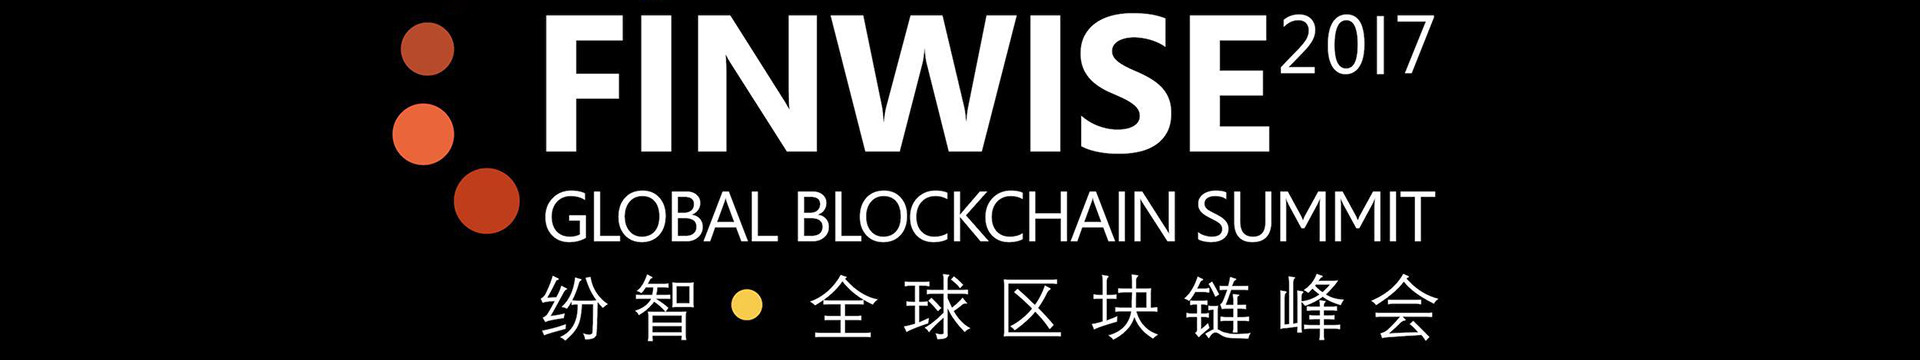 2017 Finwise Global Blockchain Summit 纷智·全球区块链峰会